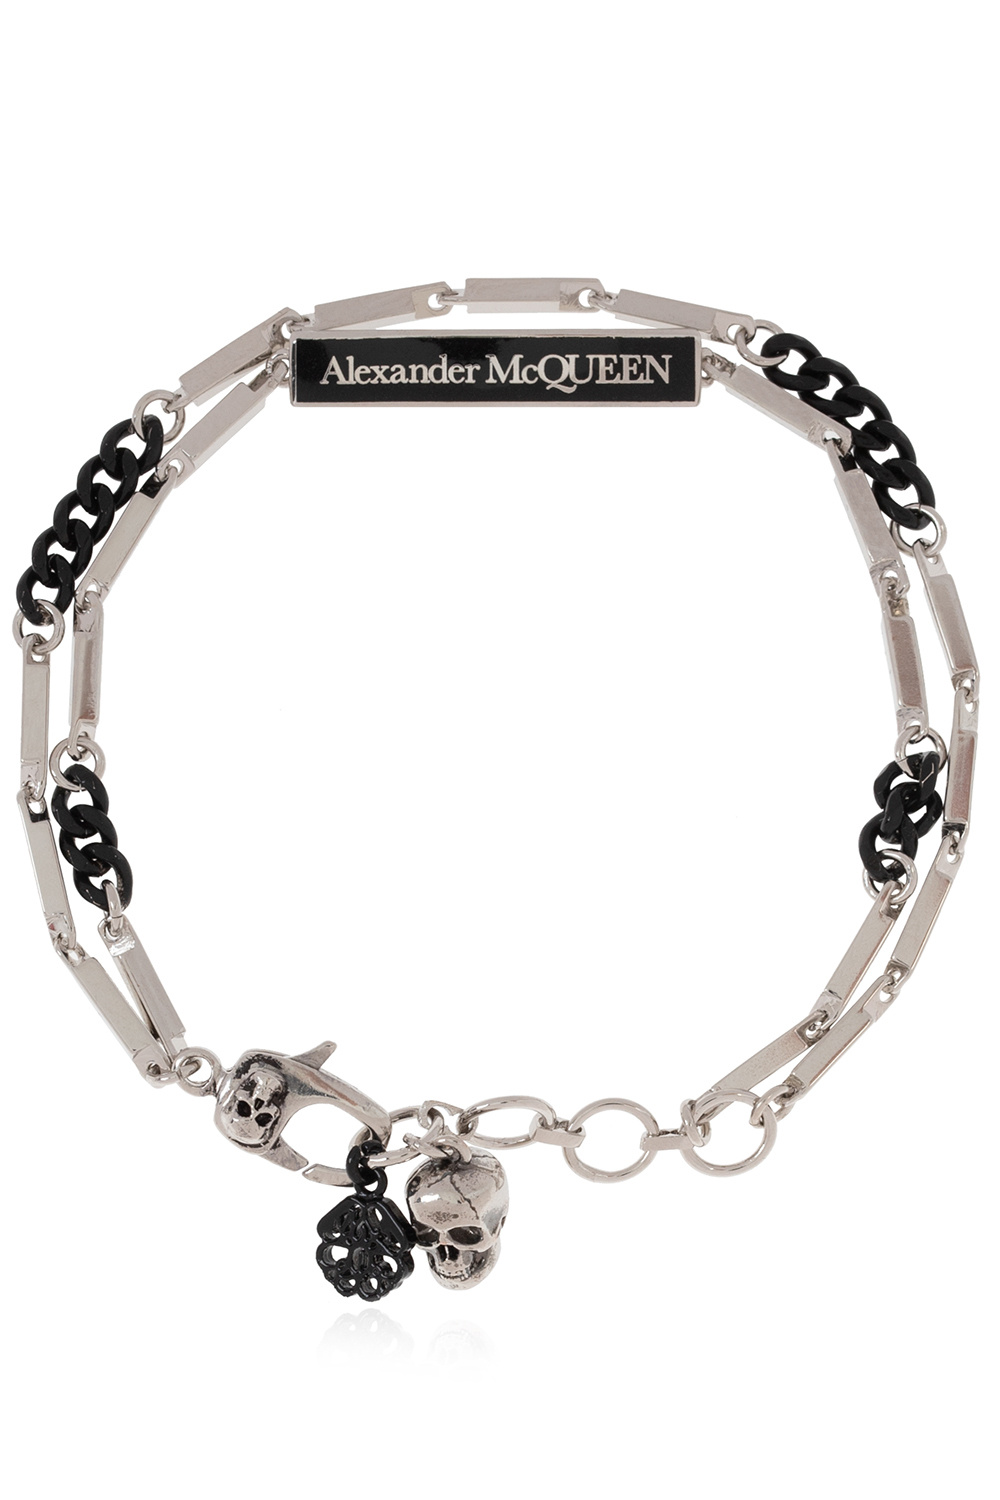 Alexander McQueen ALEXANDER MCQUEEN PONCHO WITH LOGO